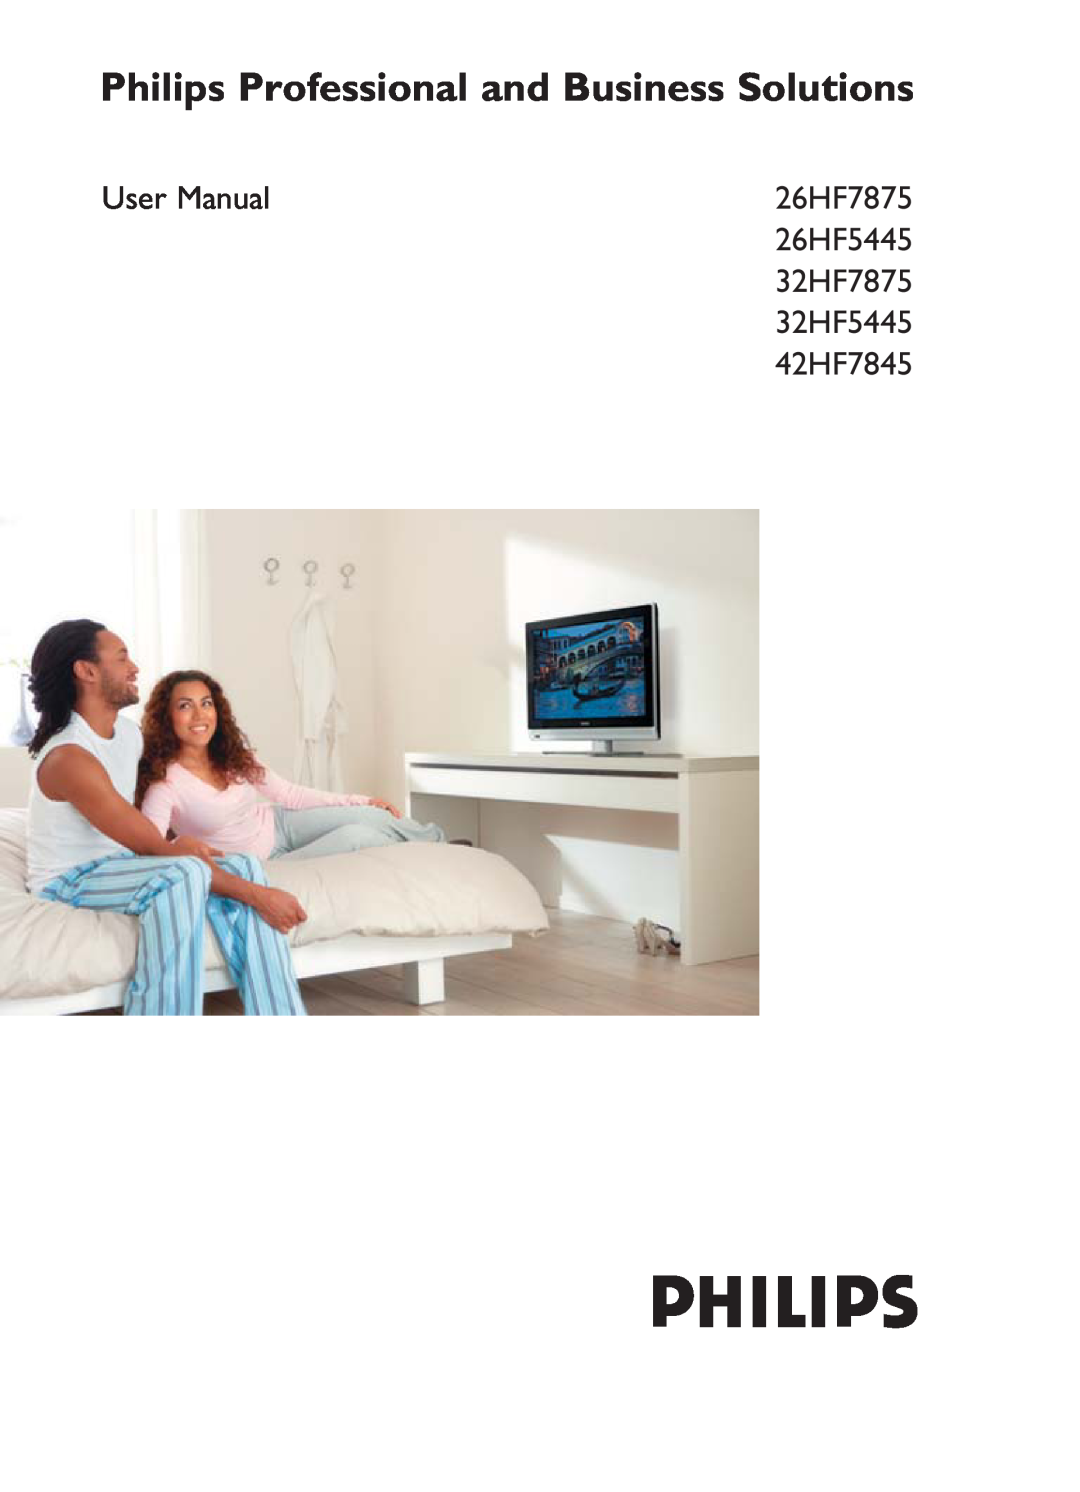 Philips user manual Philips Professional and Business Solutions, User Manual, 32HF5445 42HF7845, 26HF7875, 26HF5445 